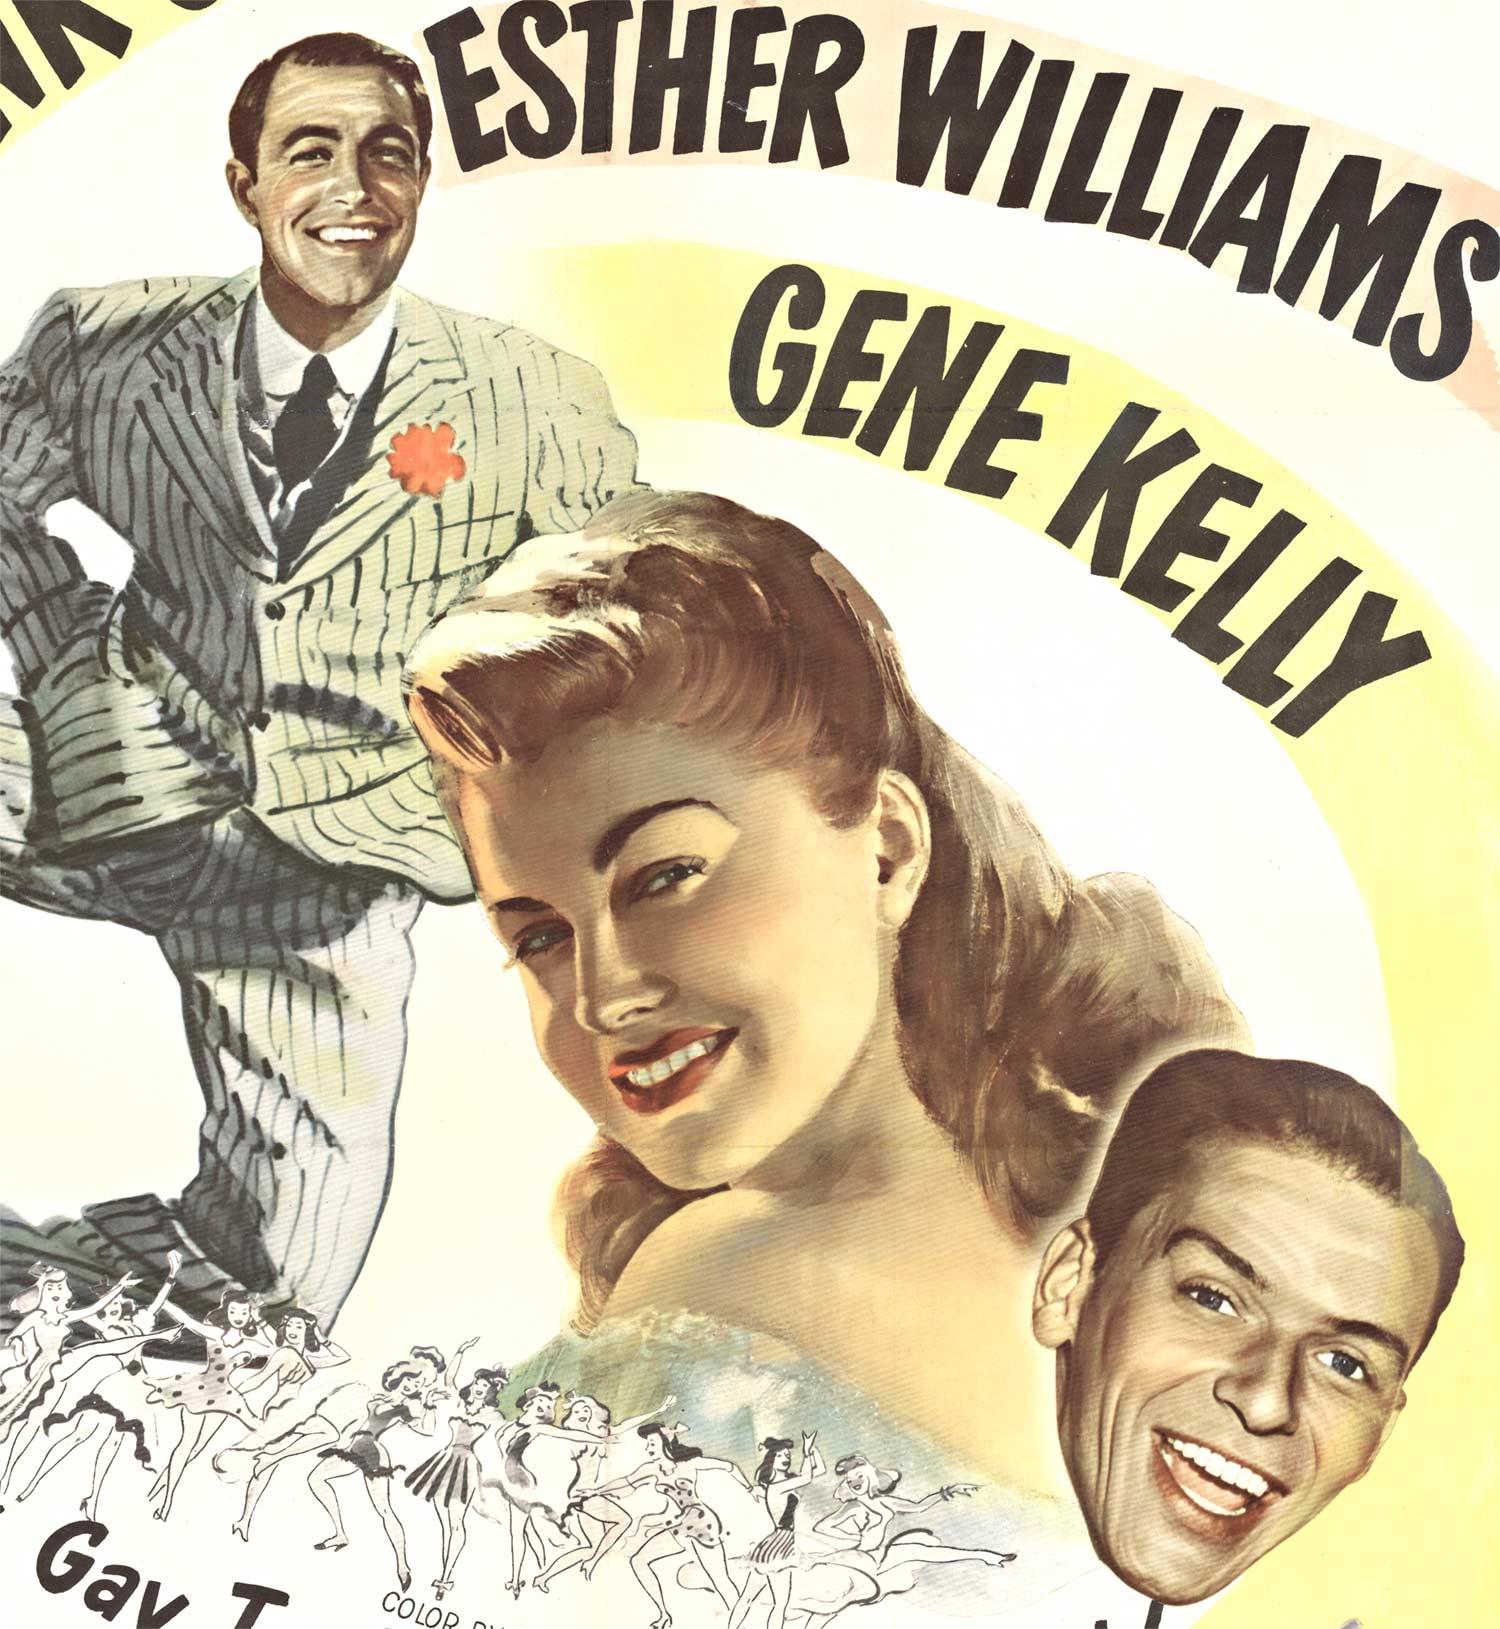 1949 the movie